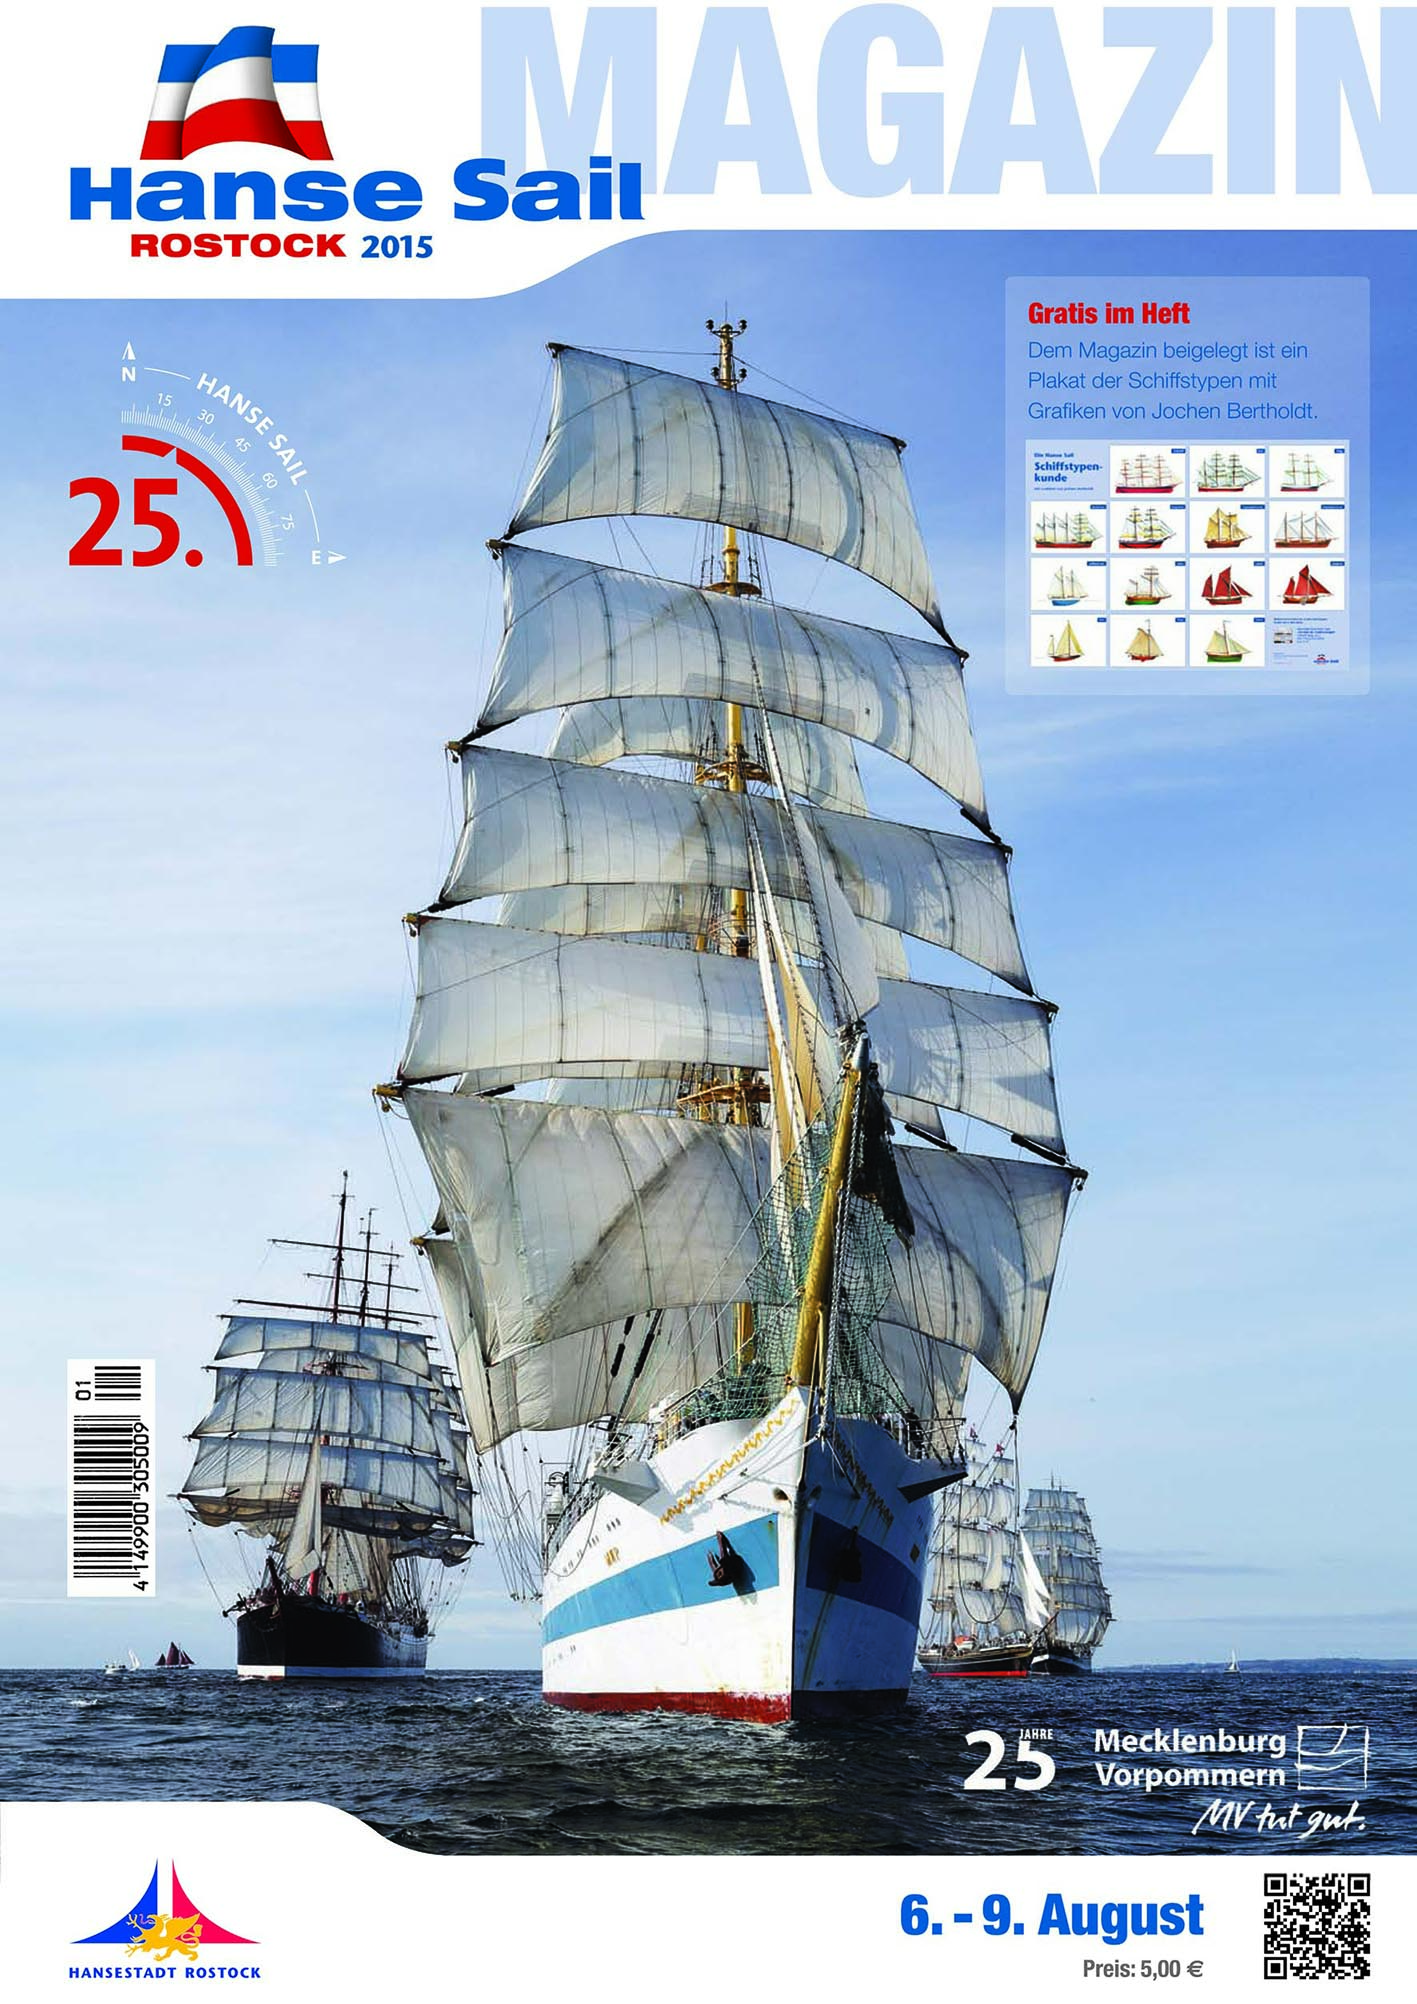 Hanse Sail Magazin 2015